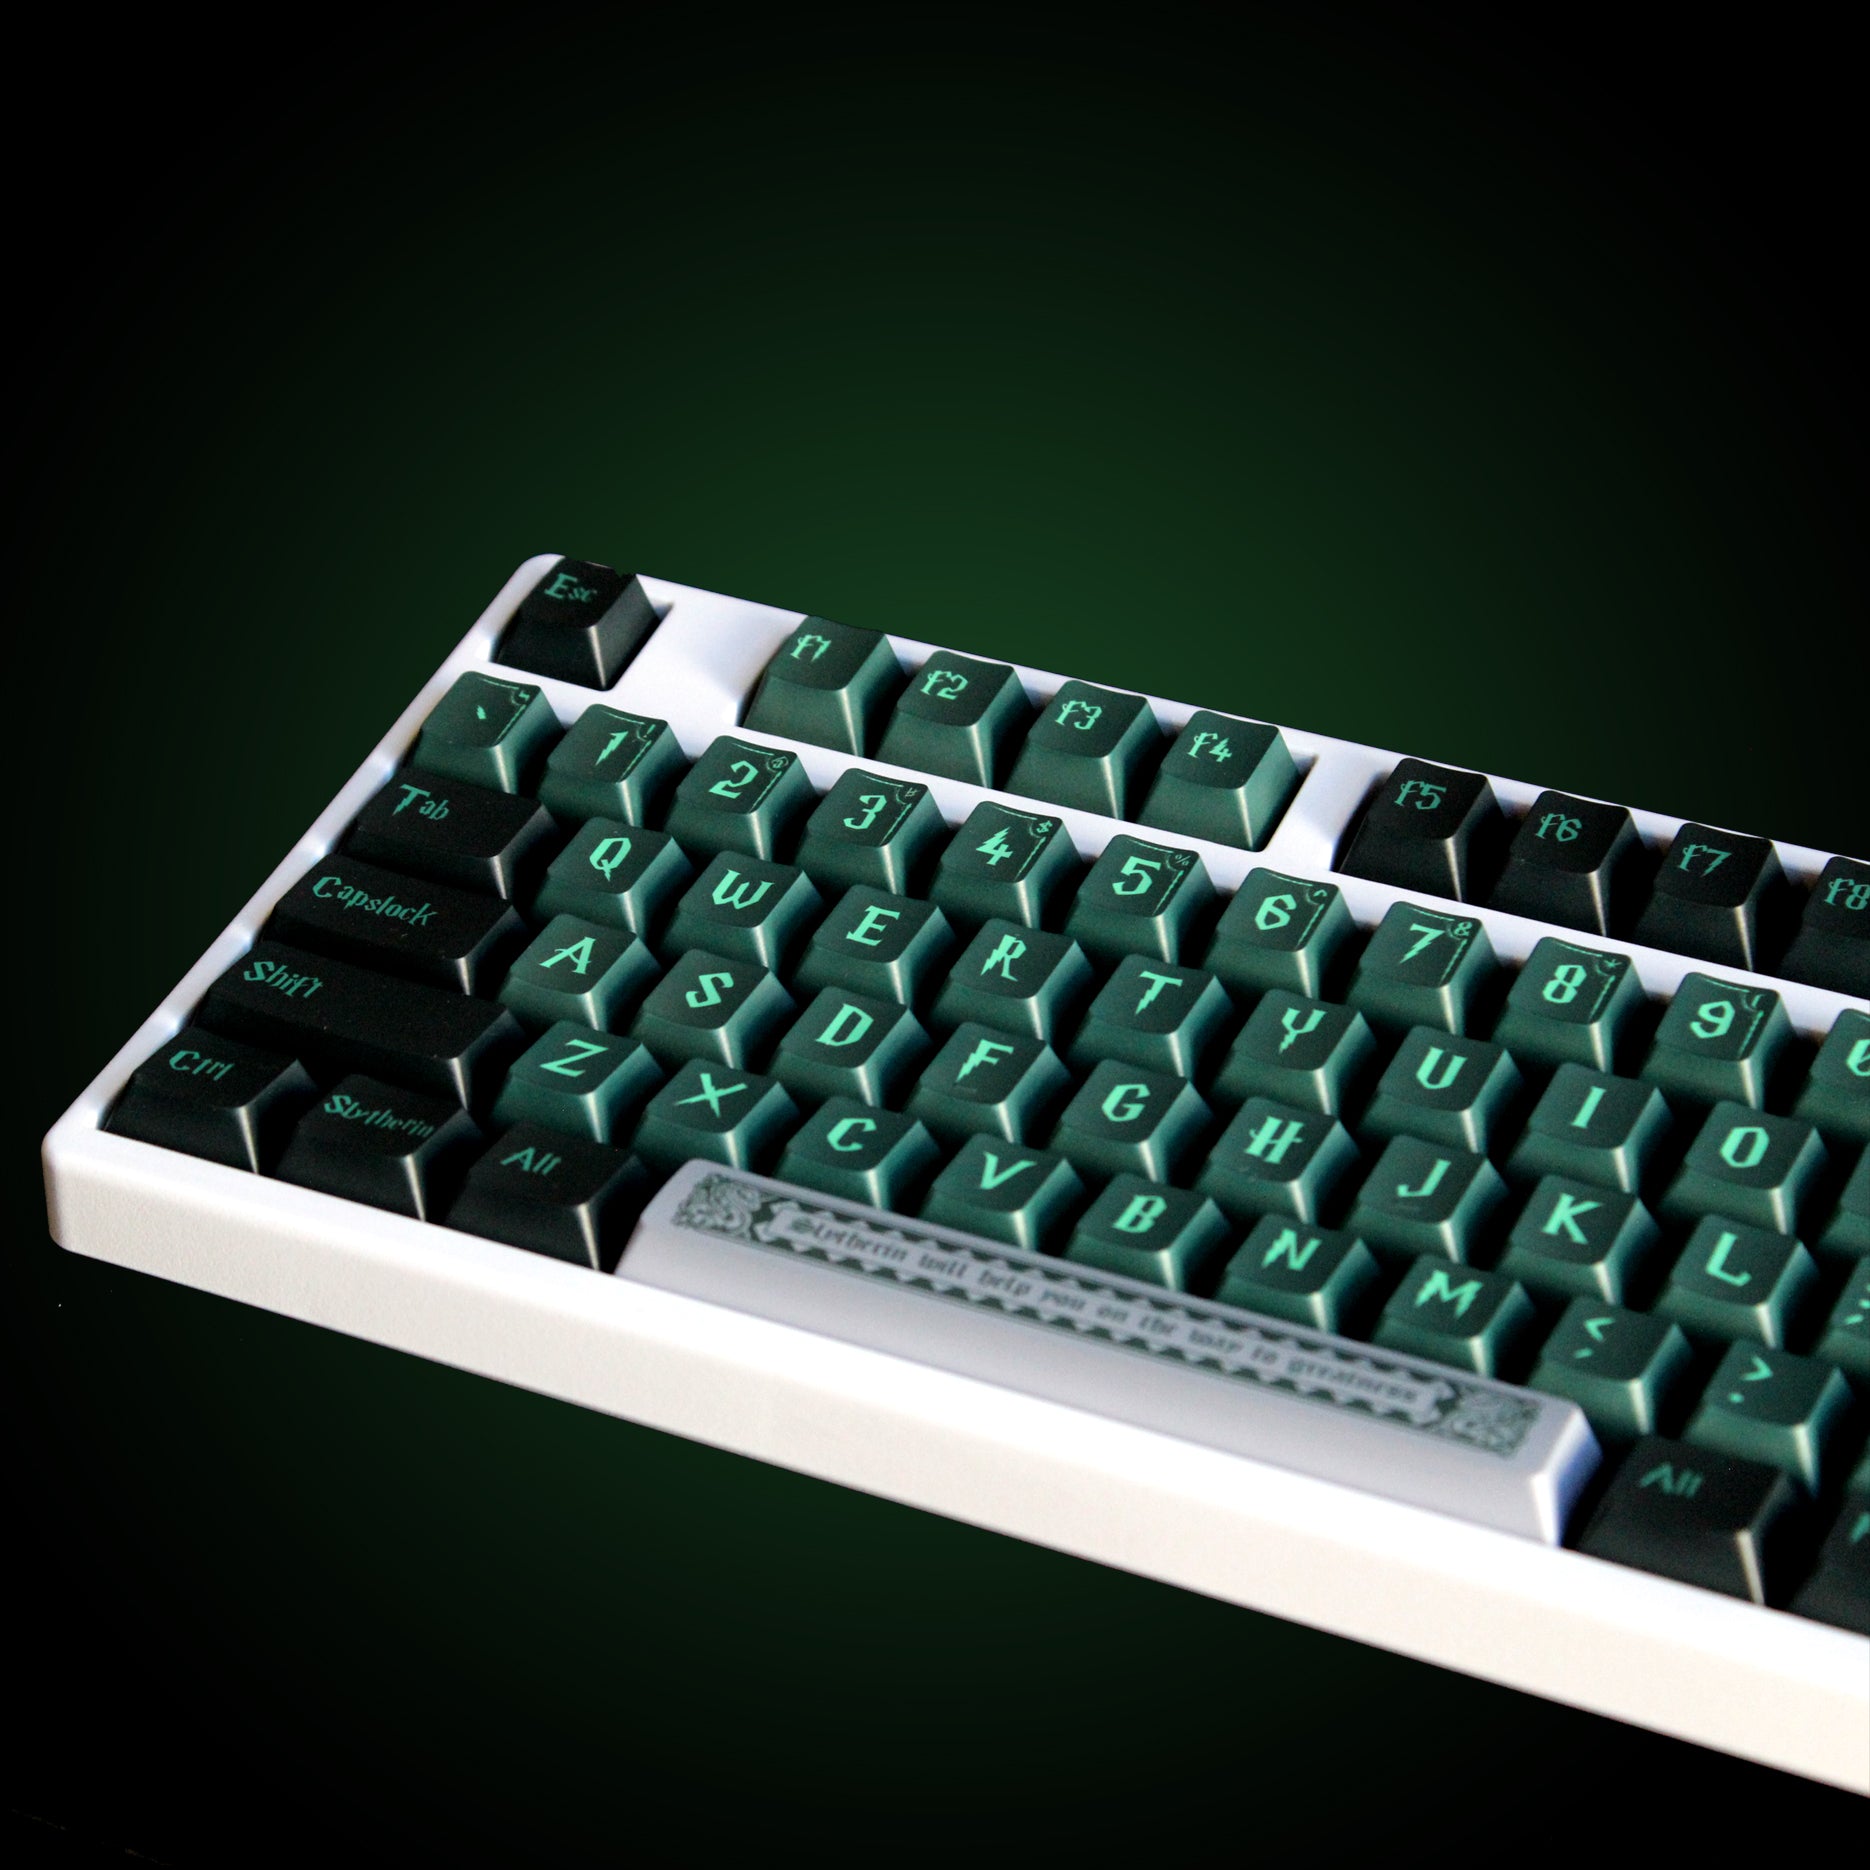 Pbt Abspbt Spanish Keycaps For Mechanical Keyboards - 112-key